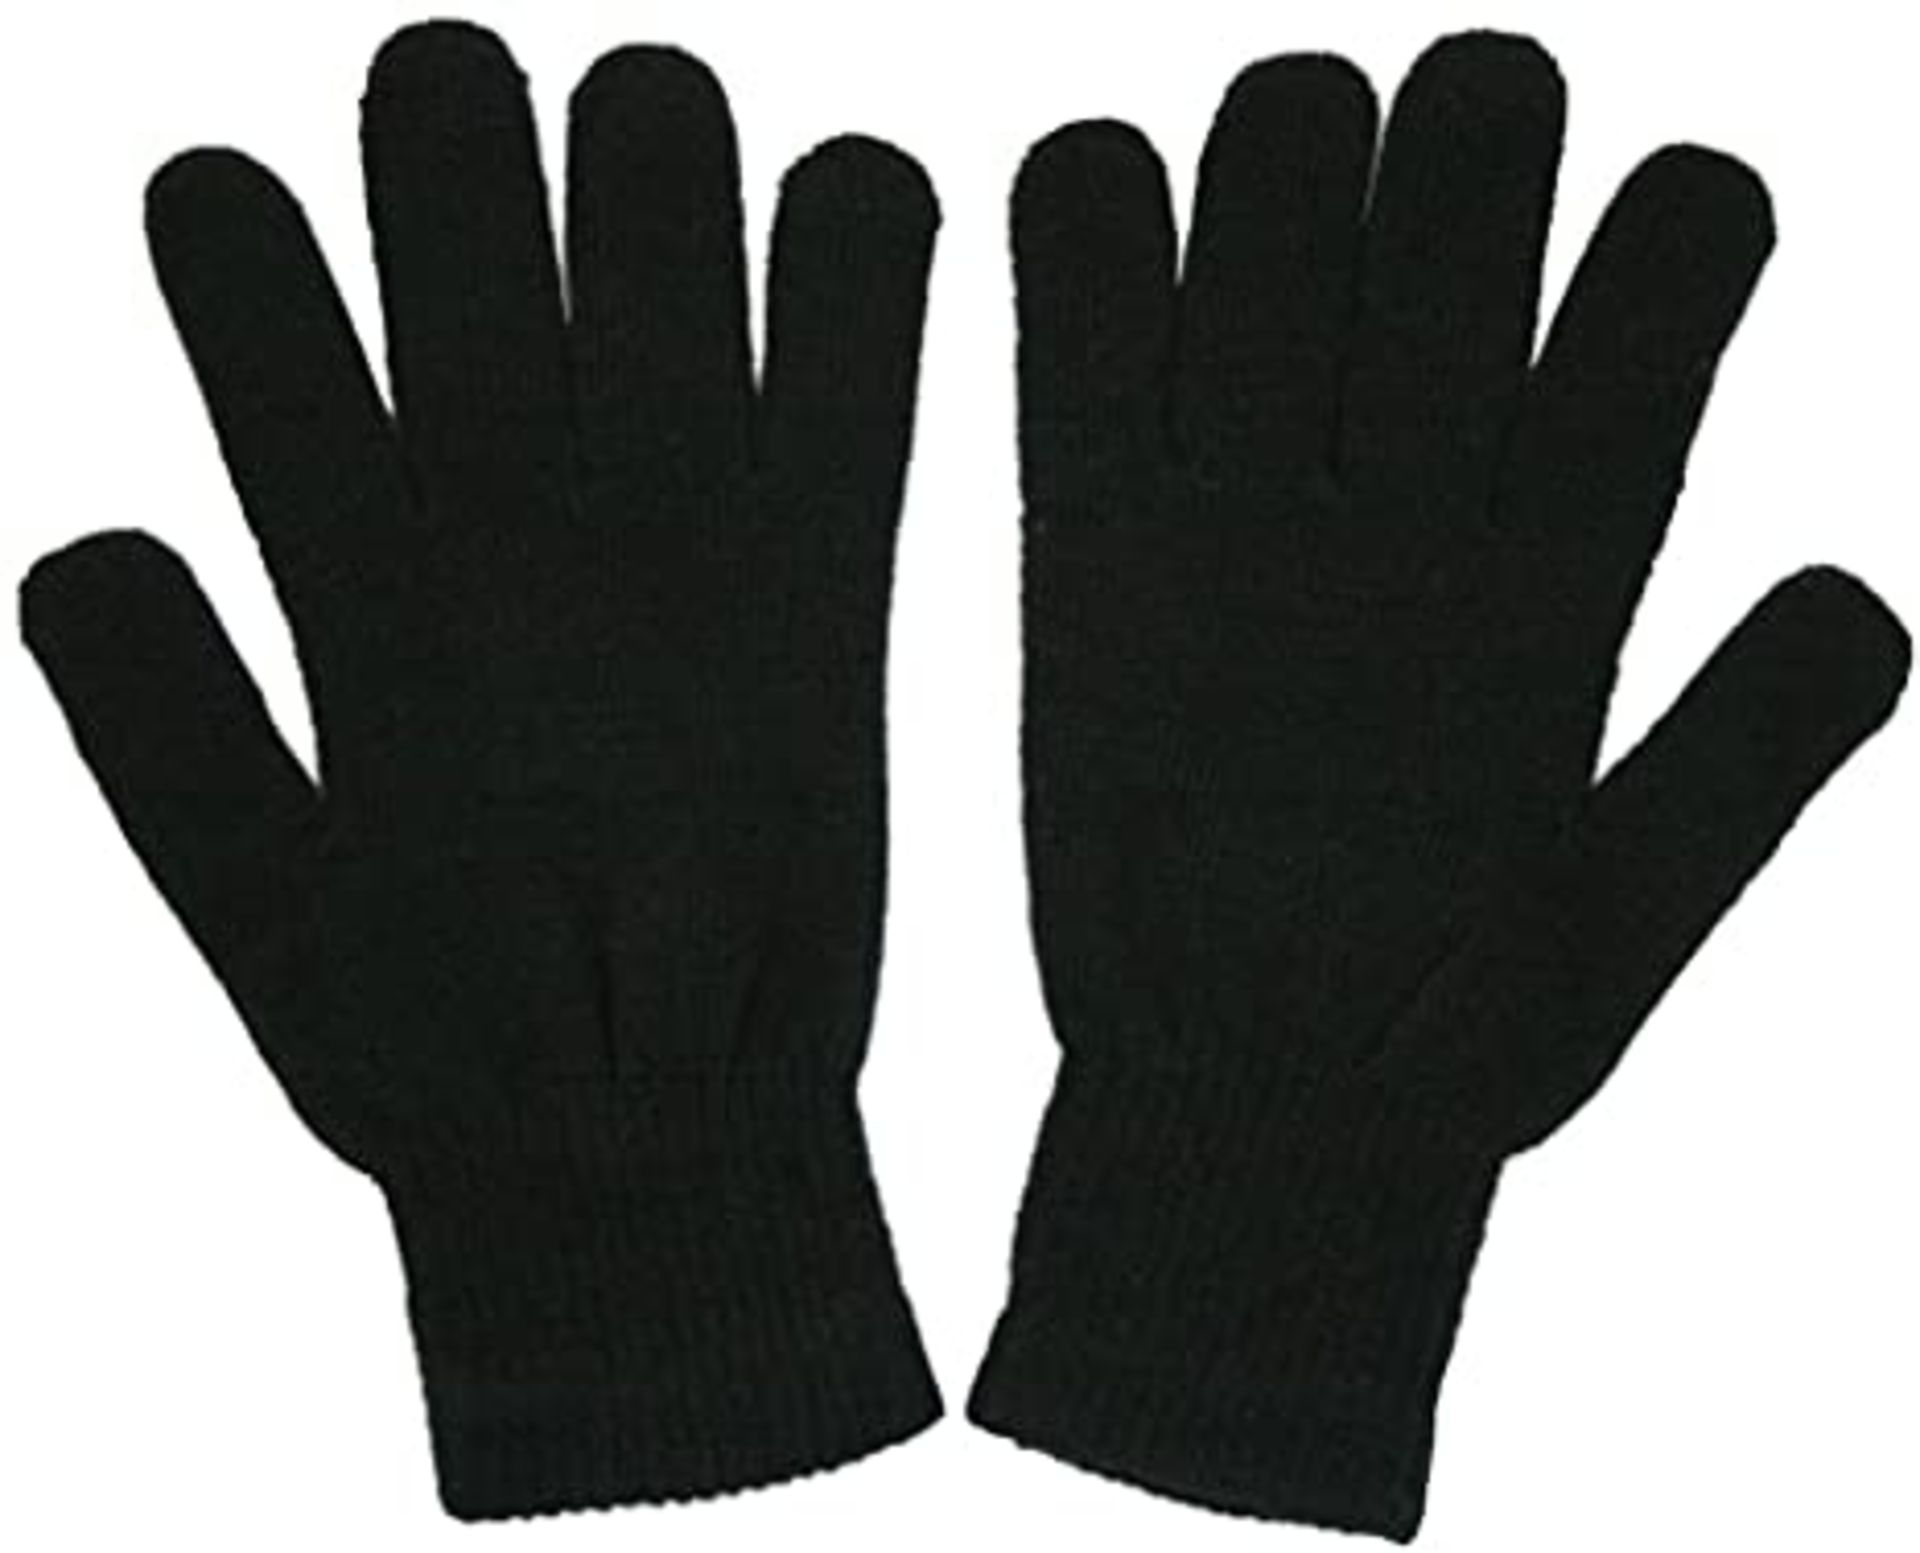 12 Pairs of magic gloves